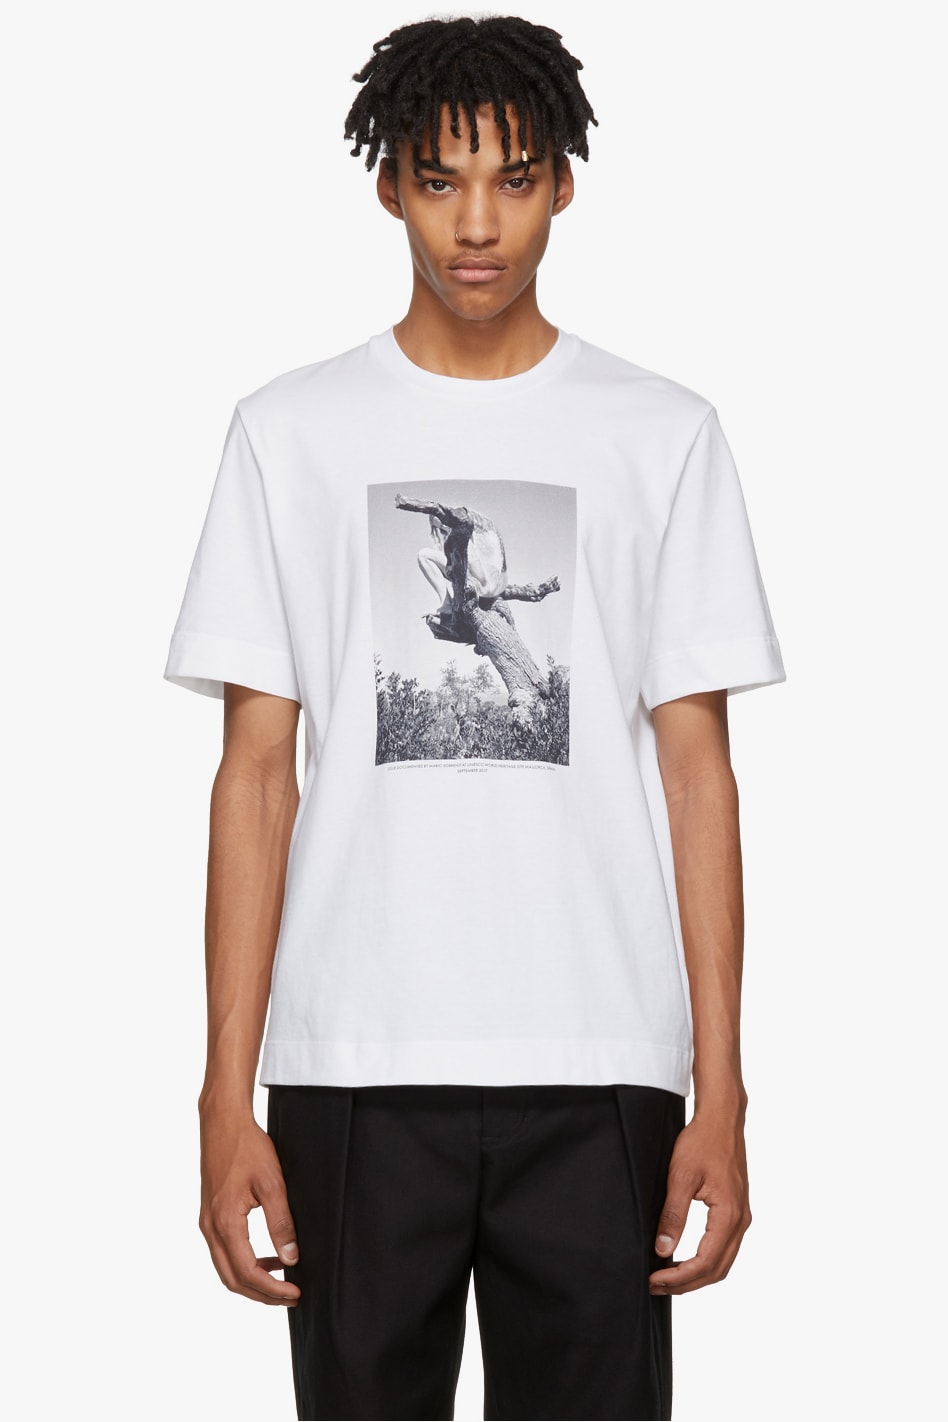 Mario Sorrenti Jil Sander Collection Fashion Apparel Clothing T-Shirt